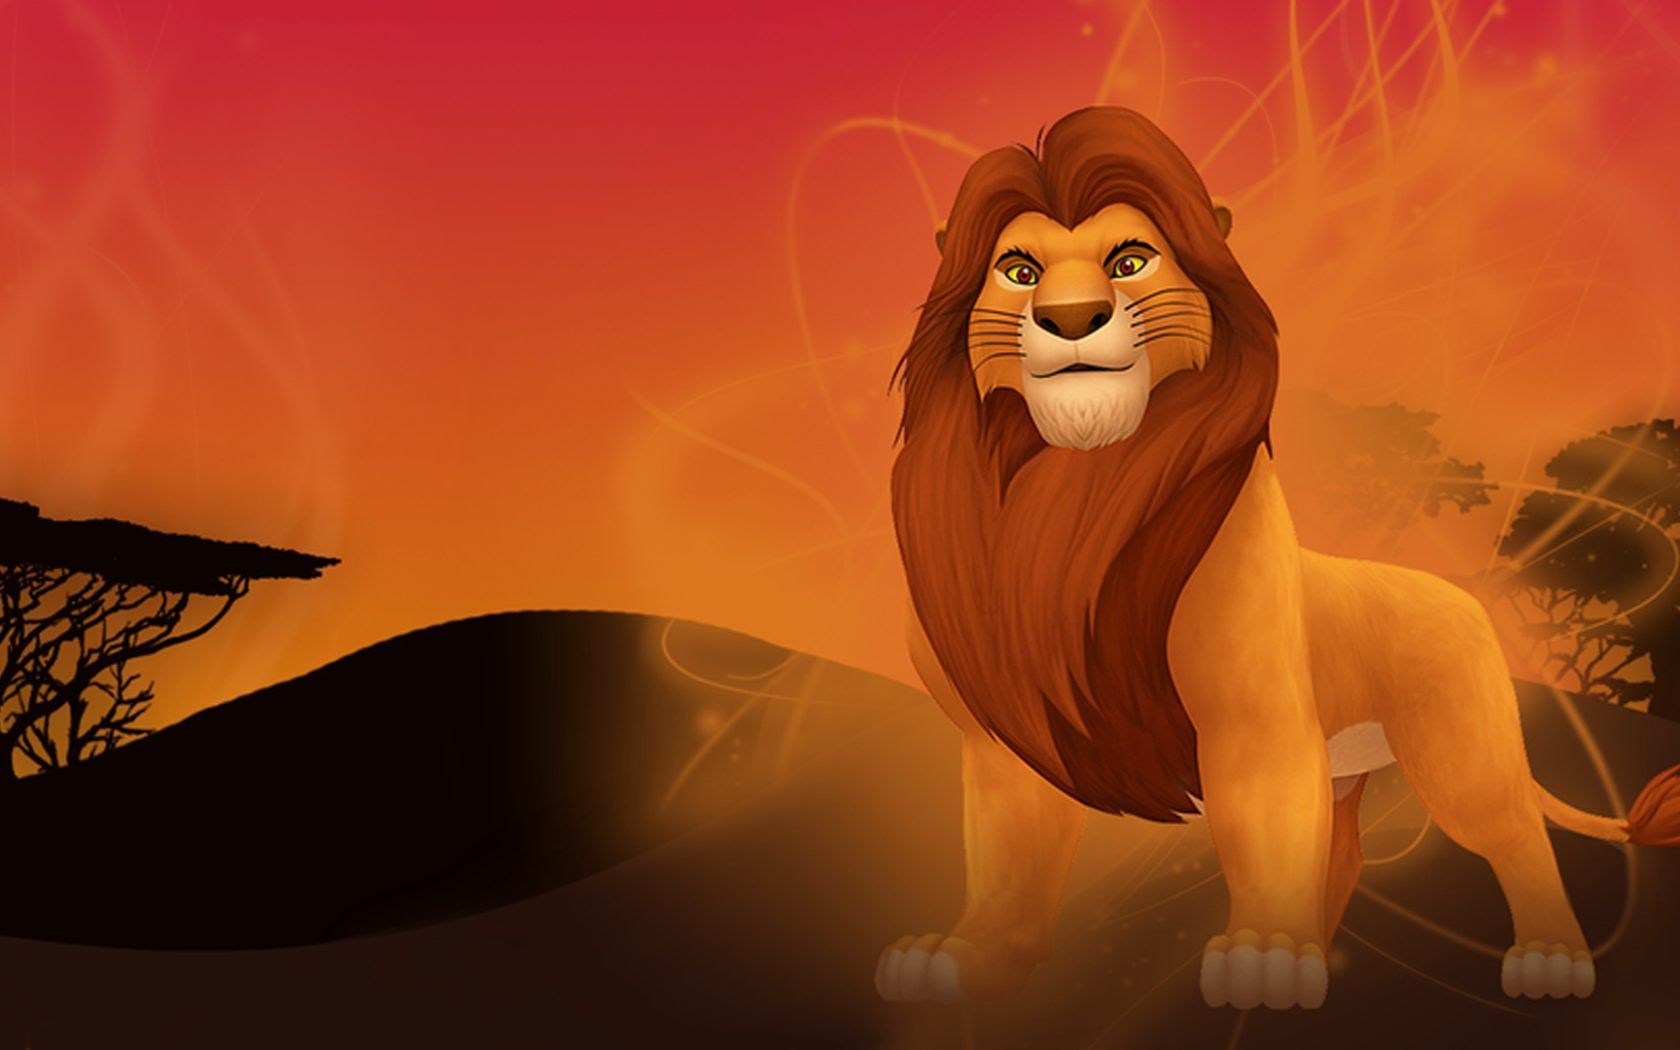 The Lion King Mufasa Walt Disney Wallpaper HD 1920x1080 : Wallpaper13.com